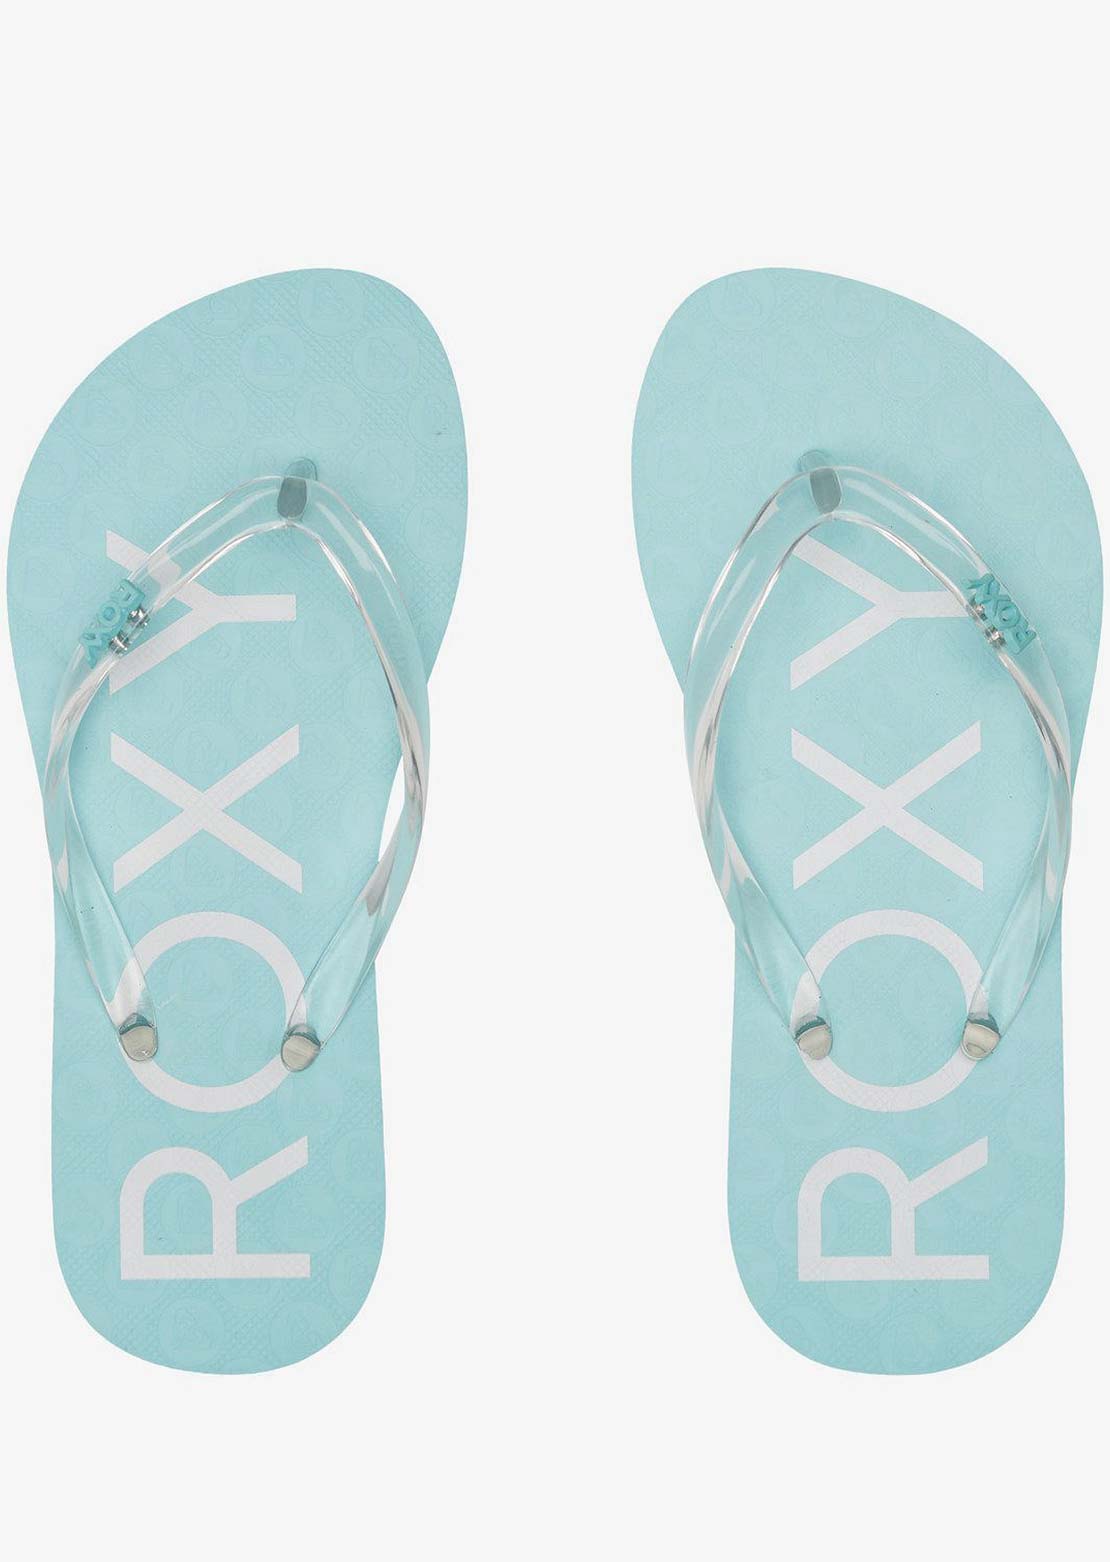 Roxy Junior RG Viva Jelly Sandals Aqua